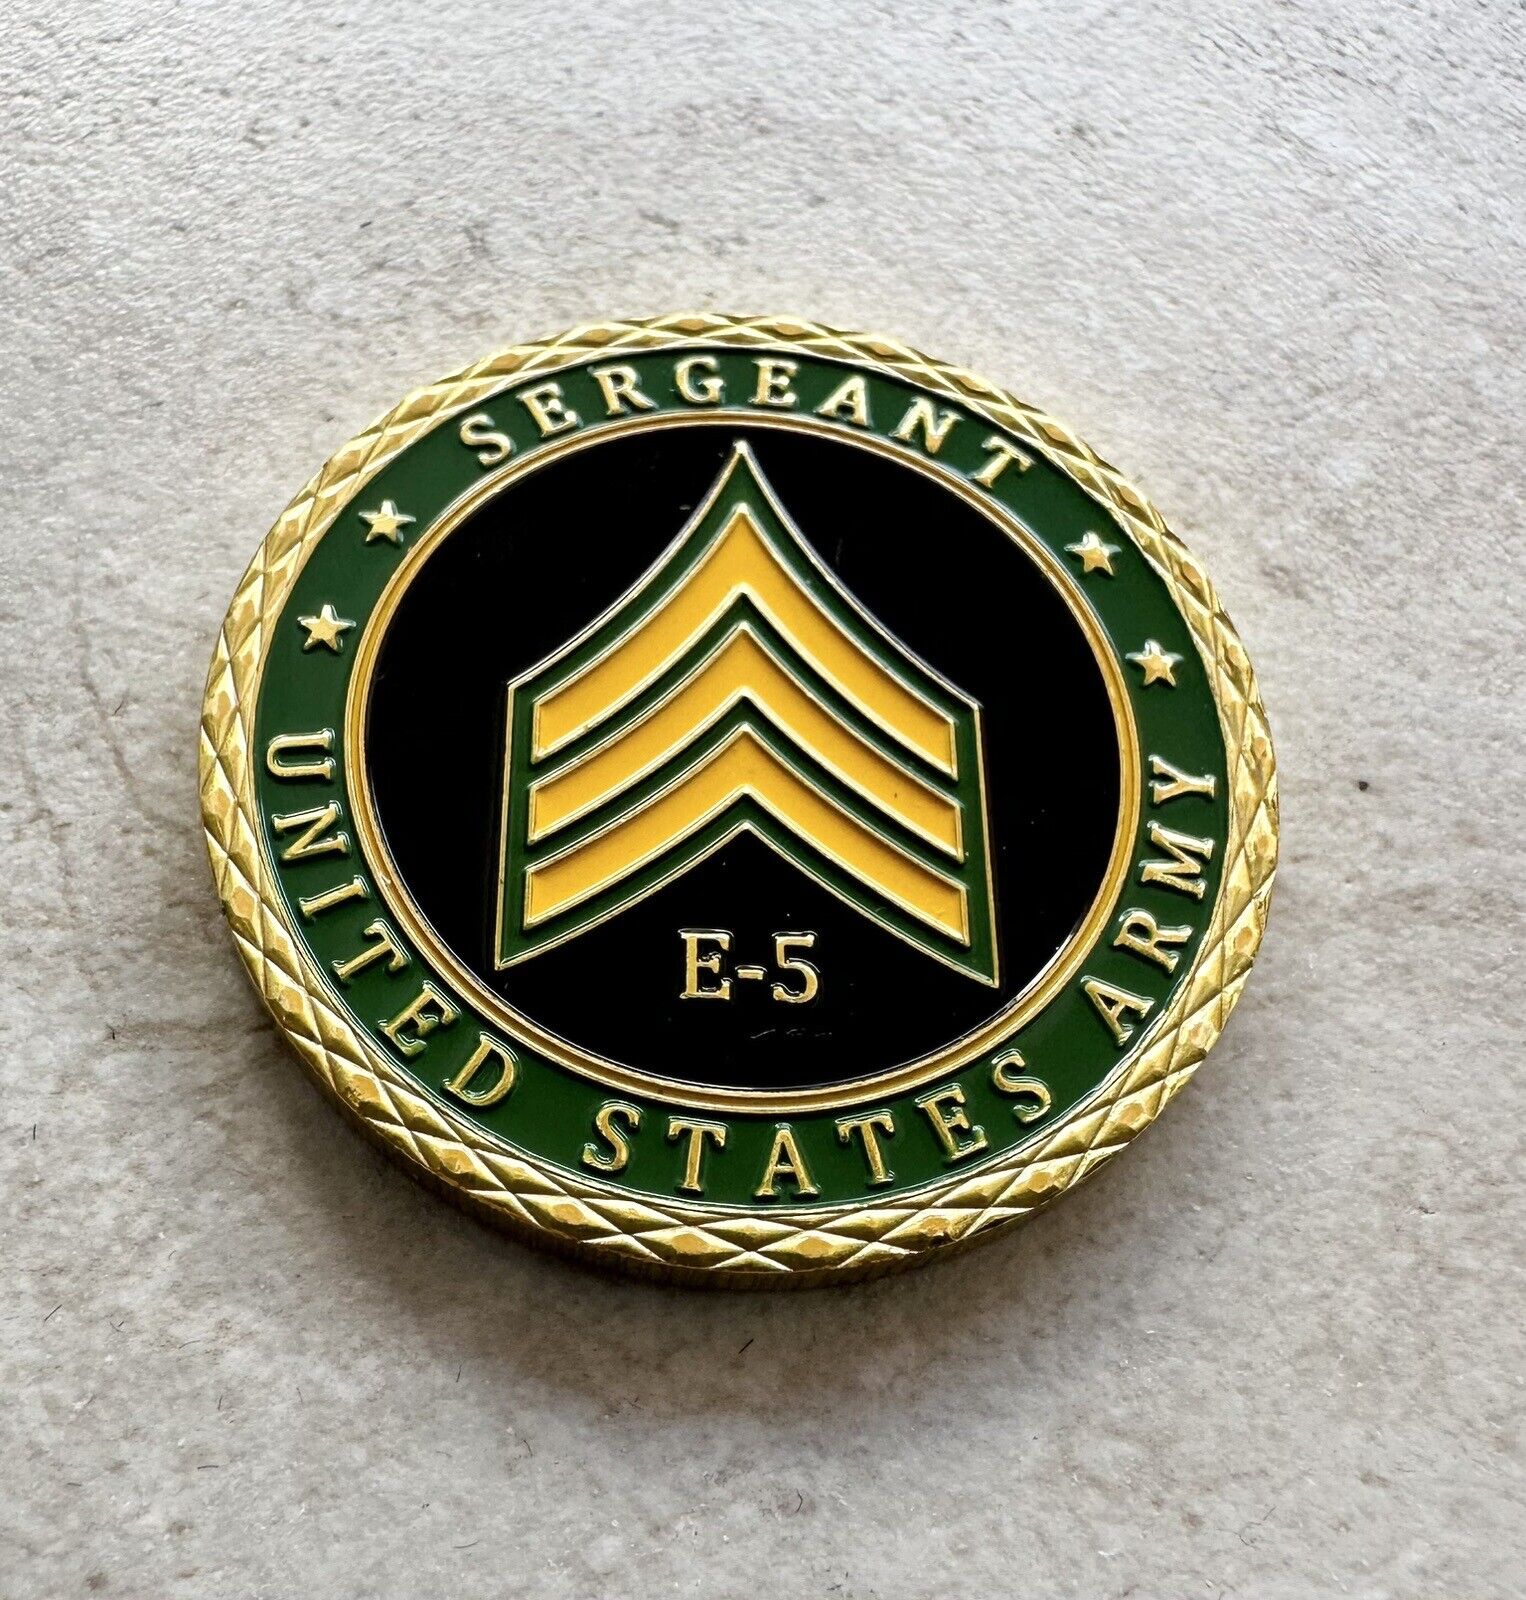 U.S. Army Sergeant E-5 Rank Challenge Coin